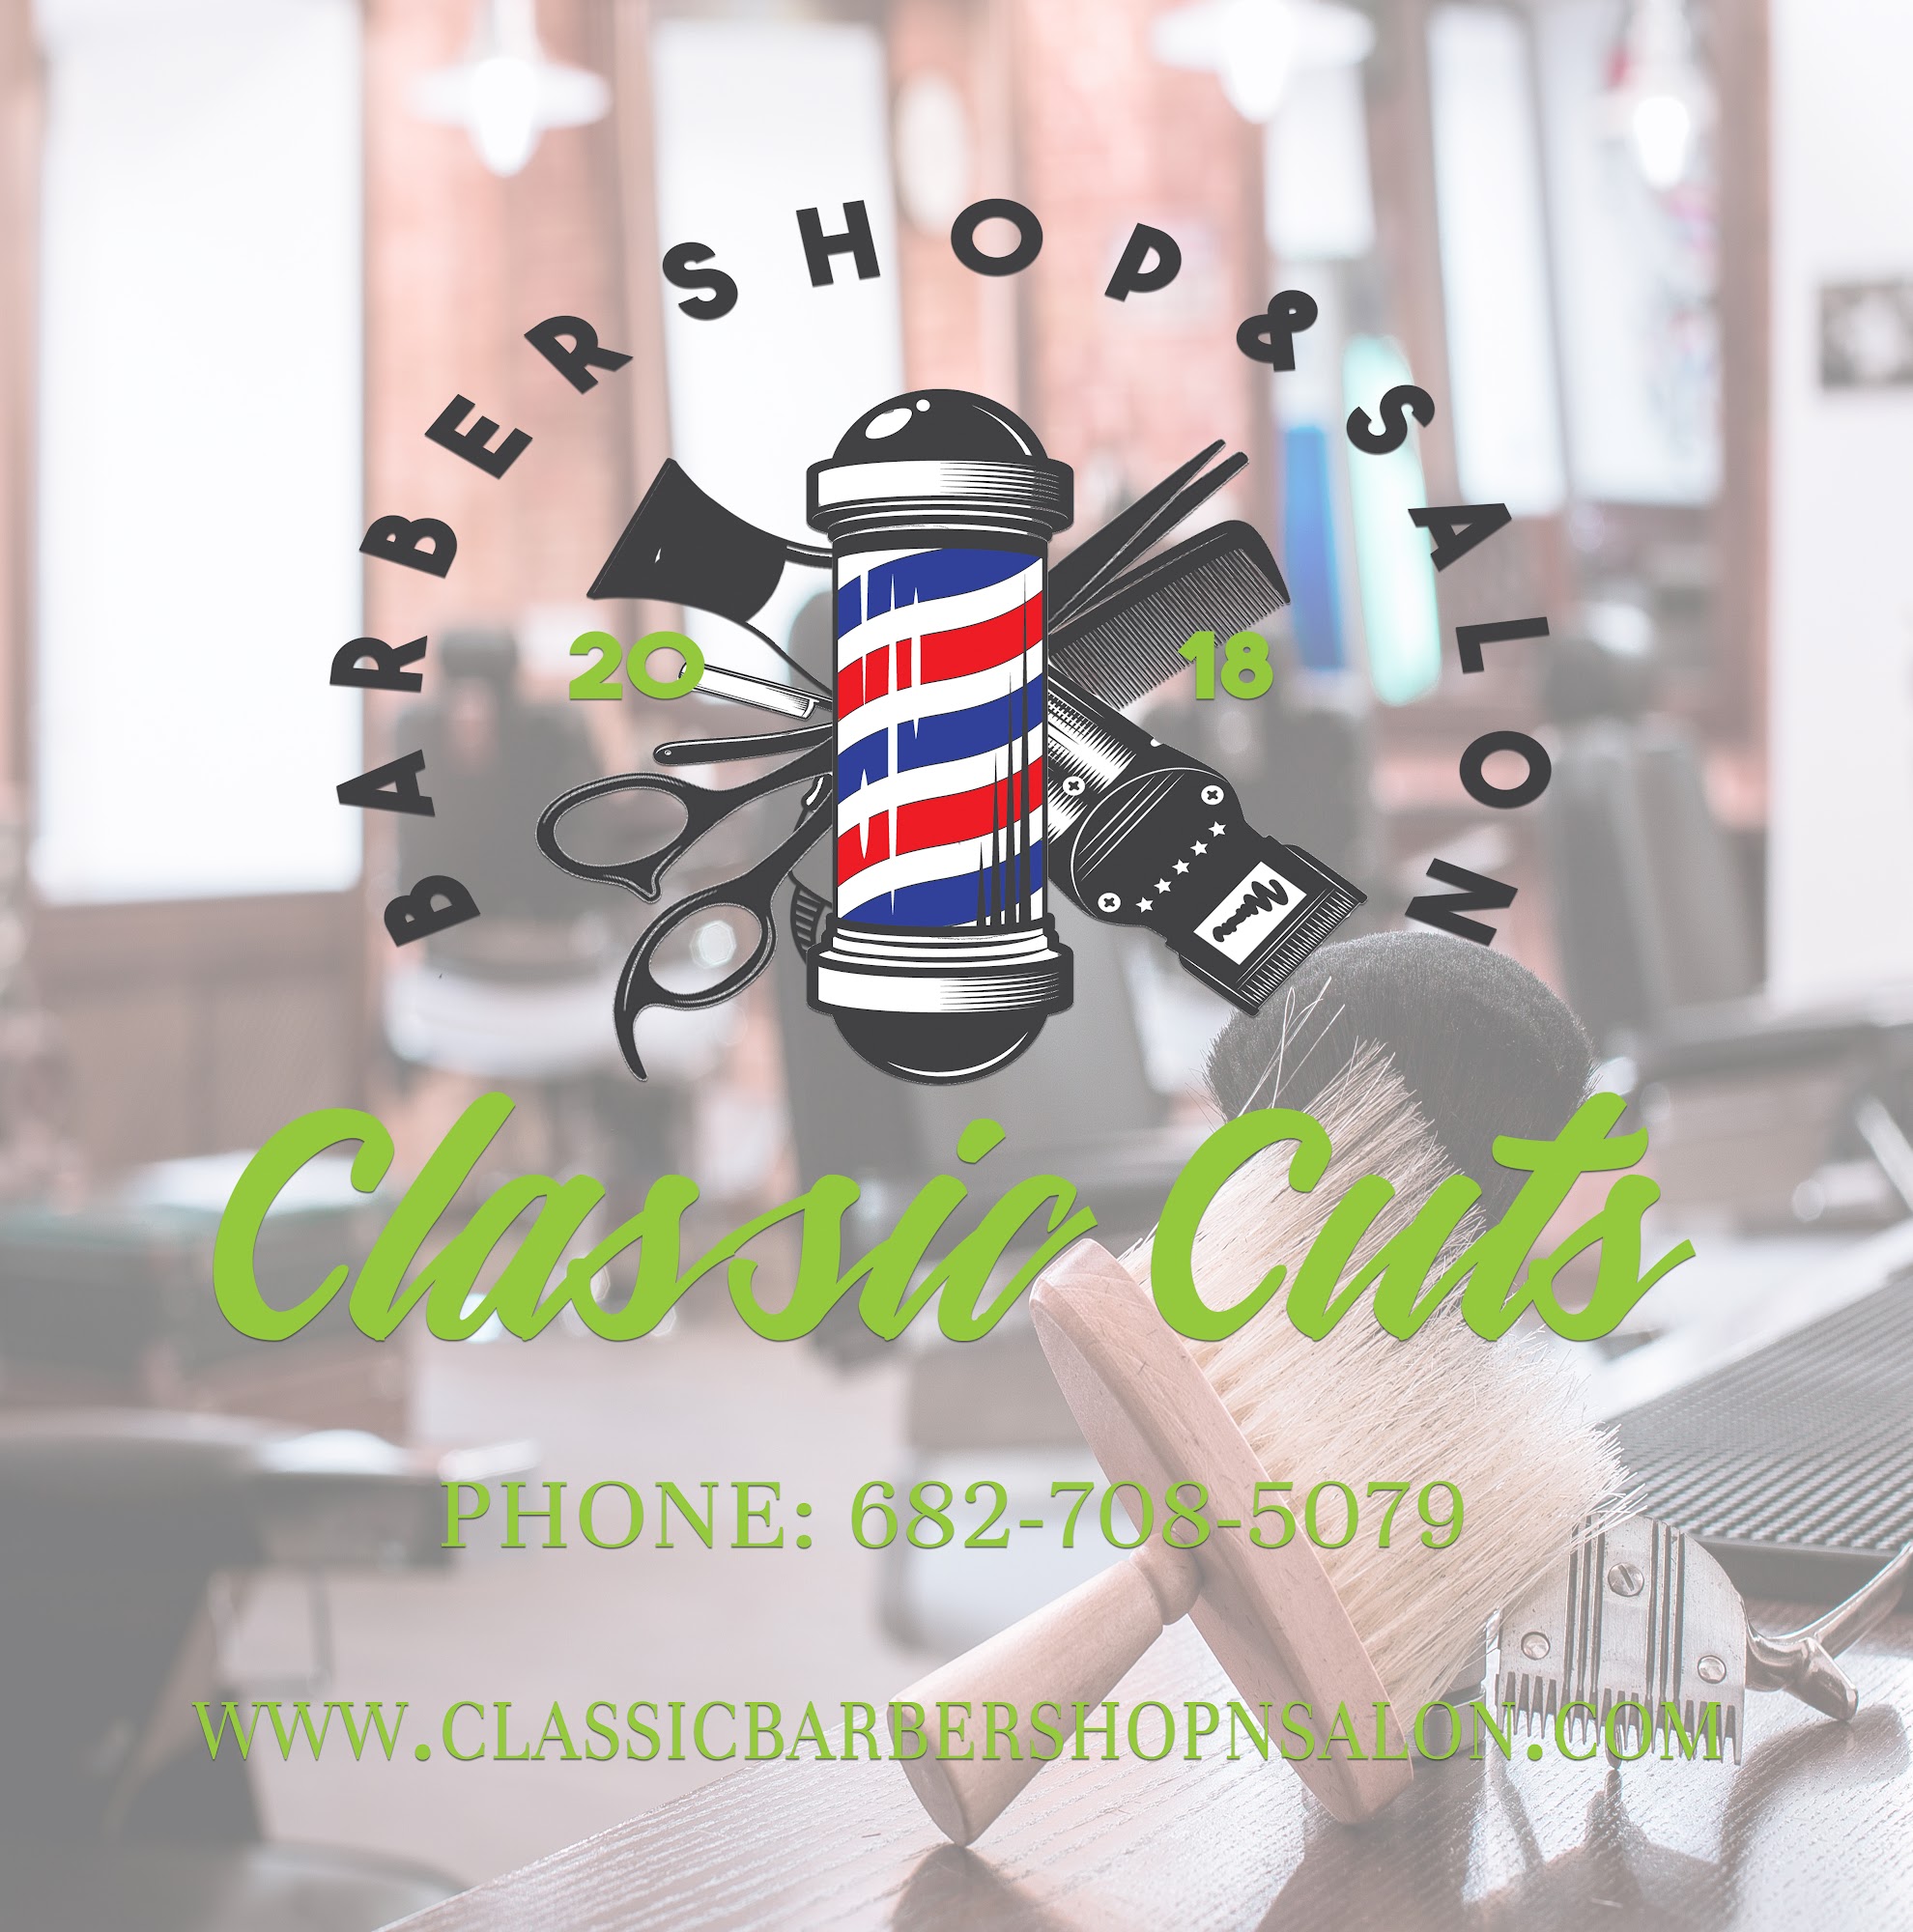 Classic Cuts Barbershop & Salon